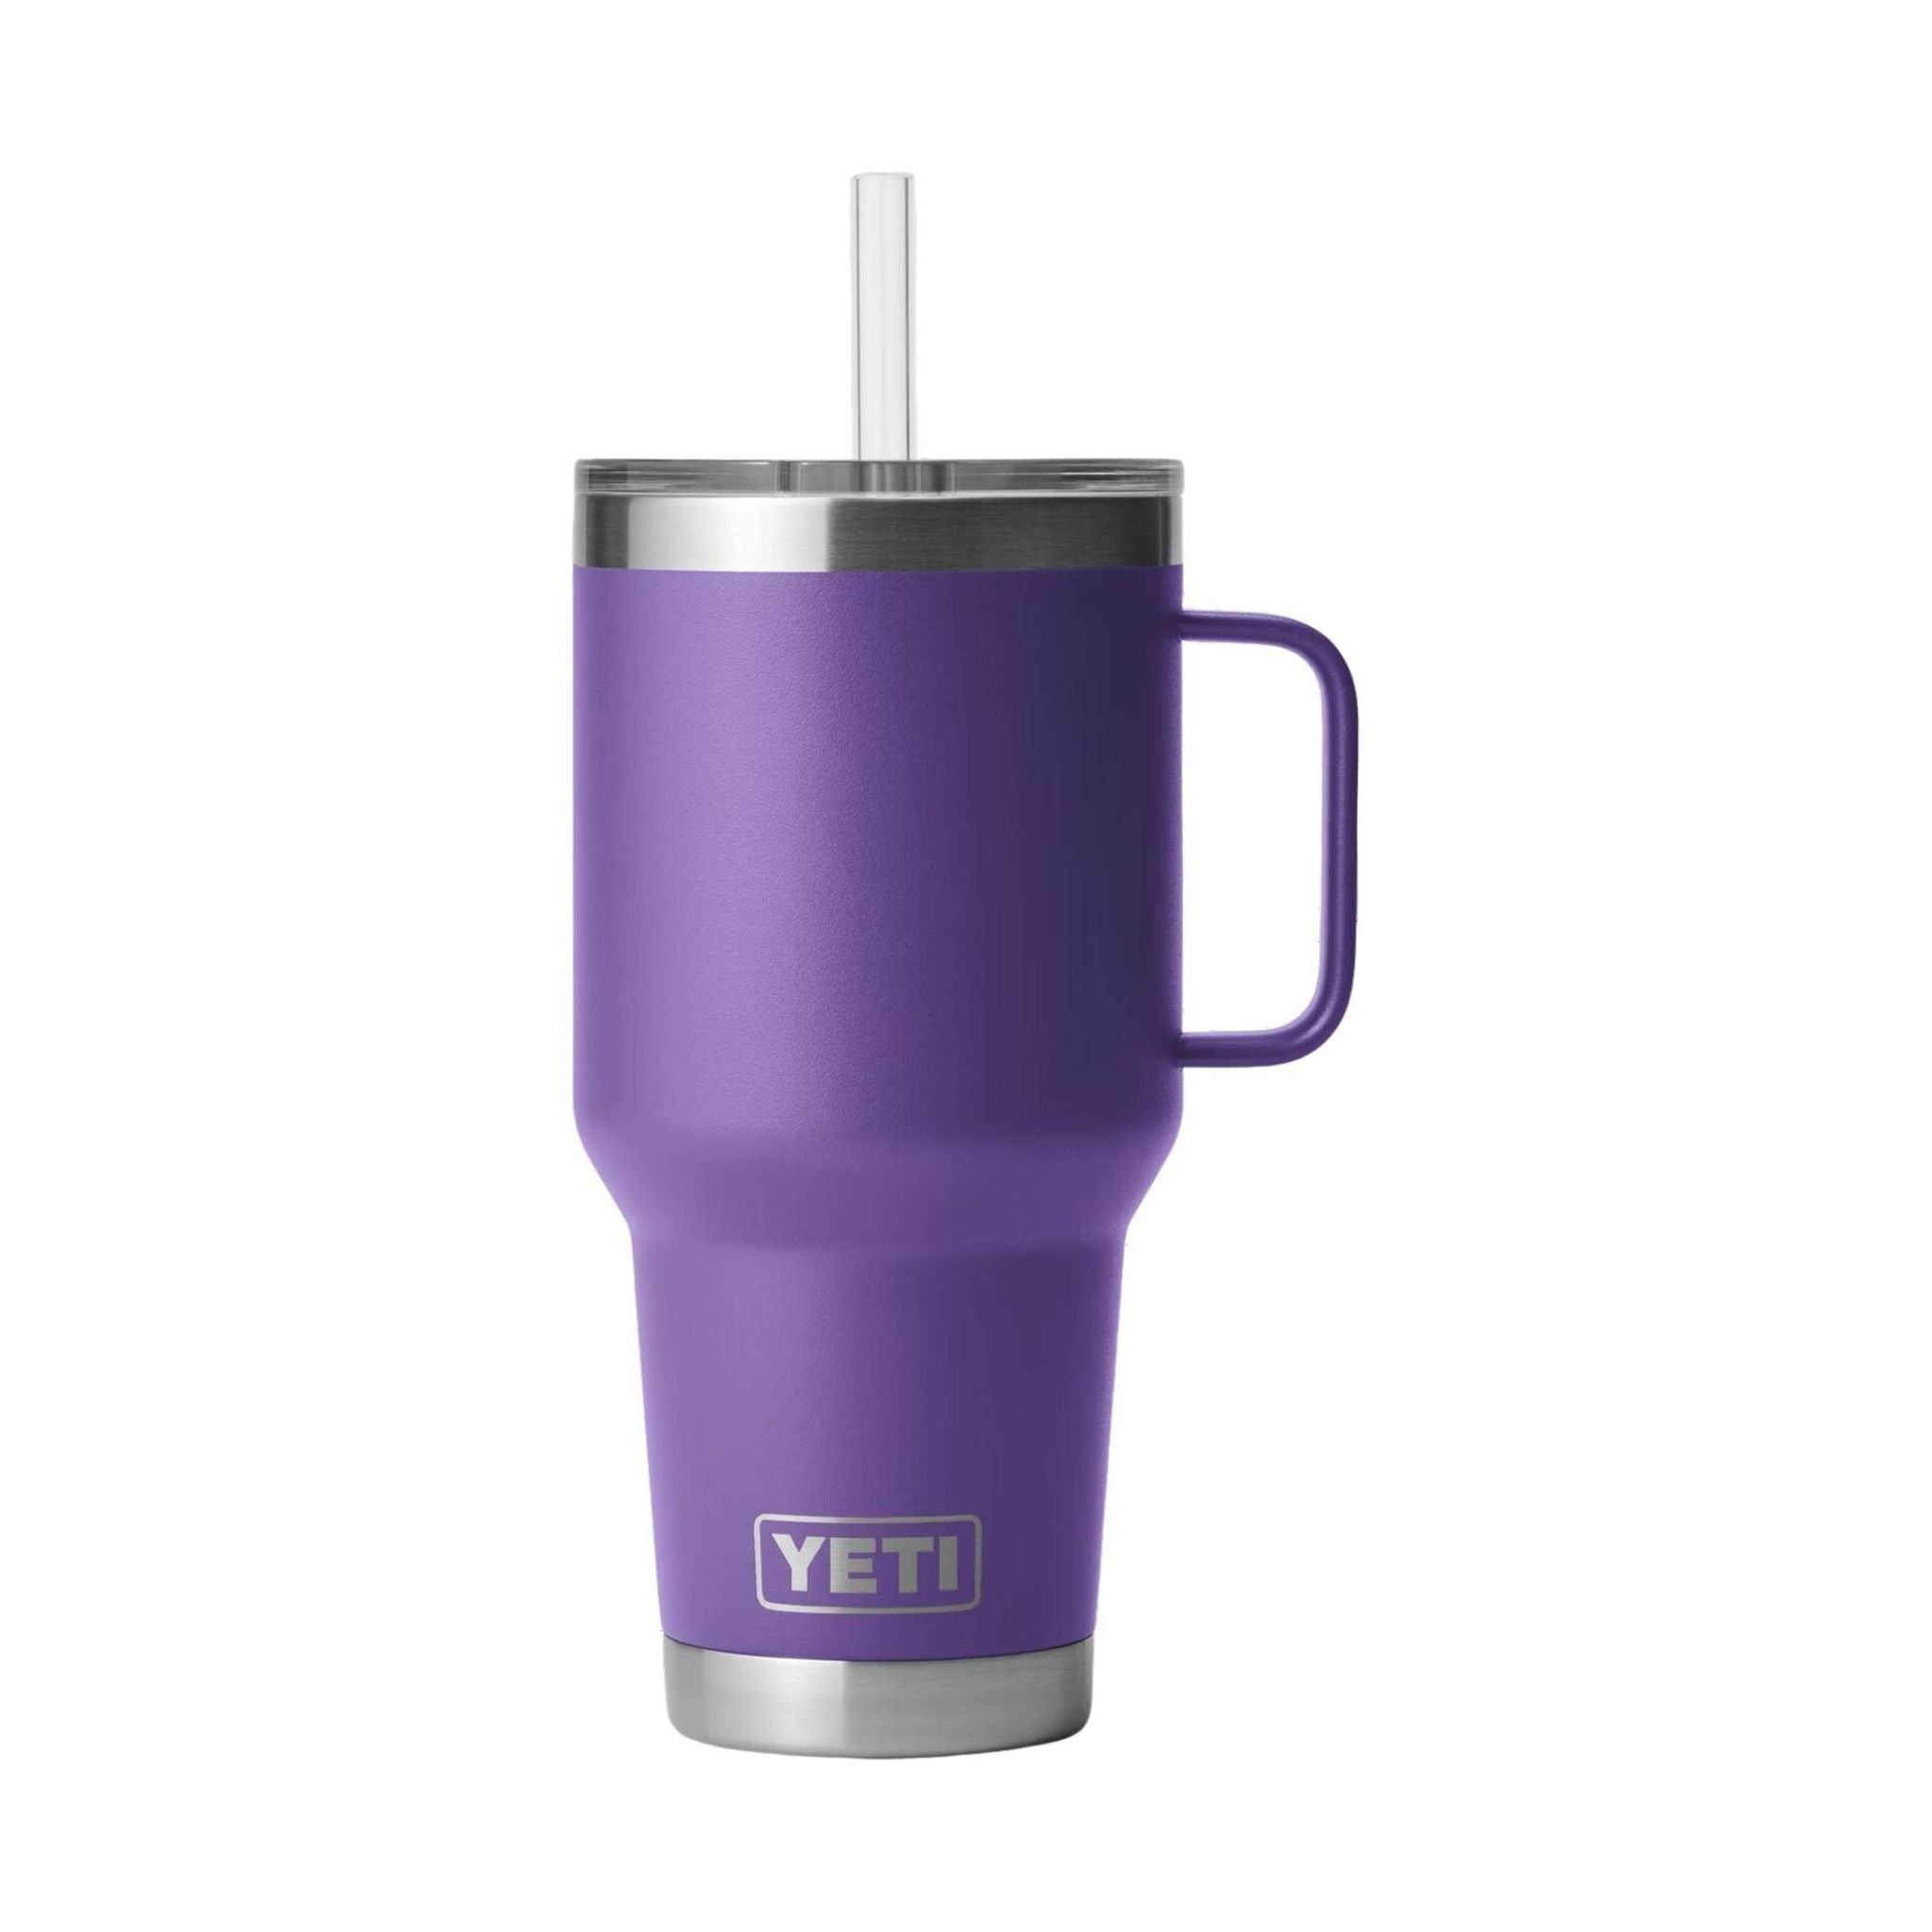 YETI Rambler 35 oz Straw Mug - Peak Purple (Limited Edition)